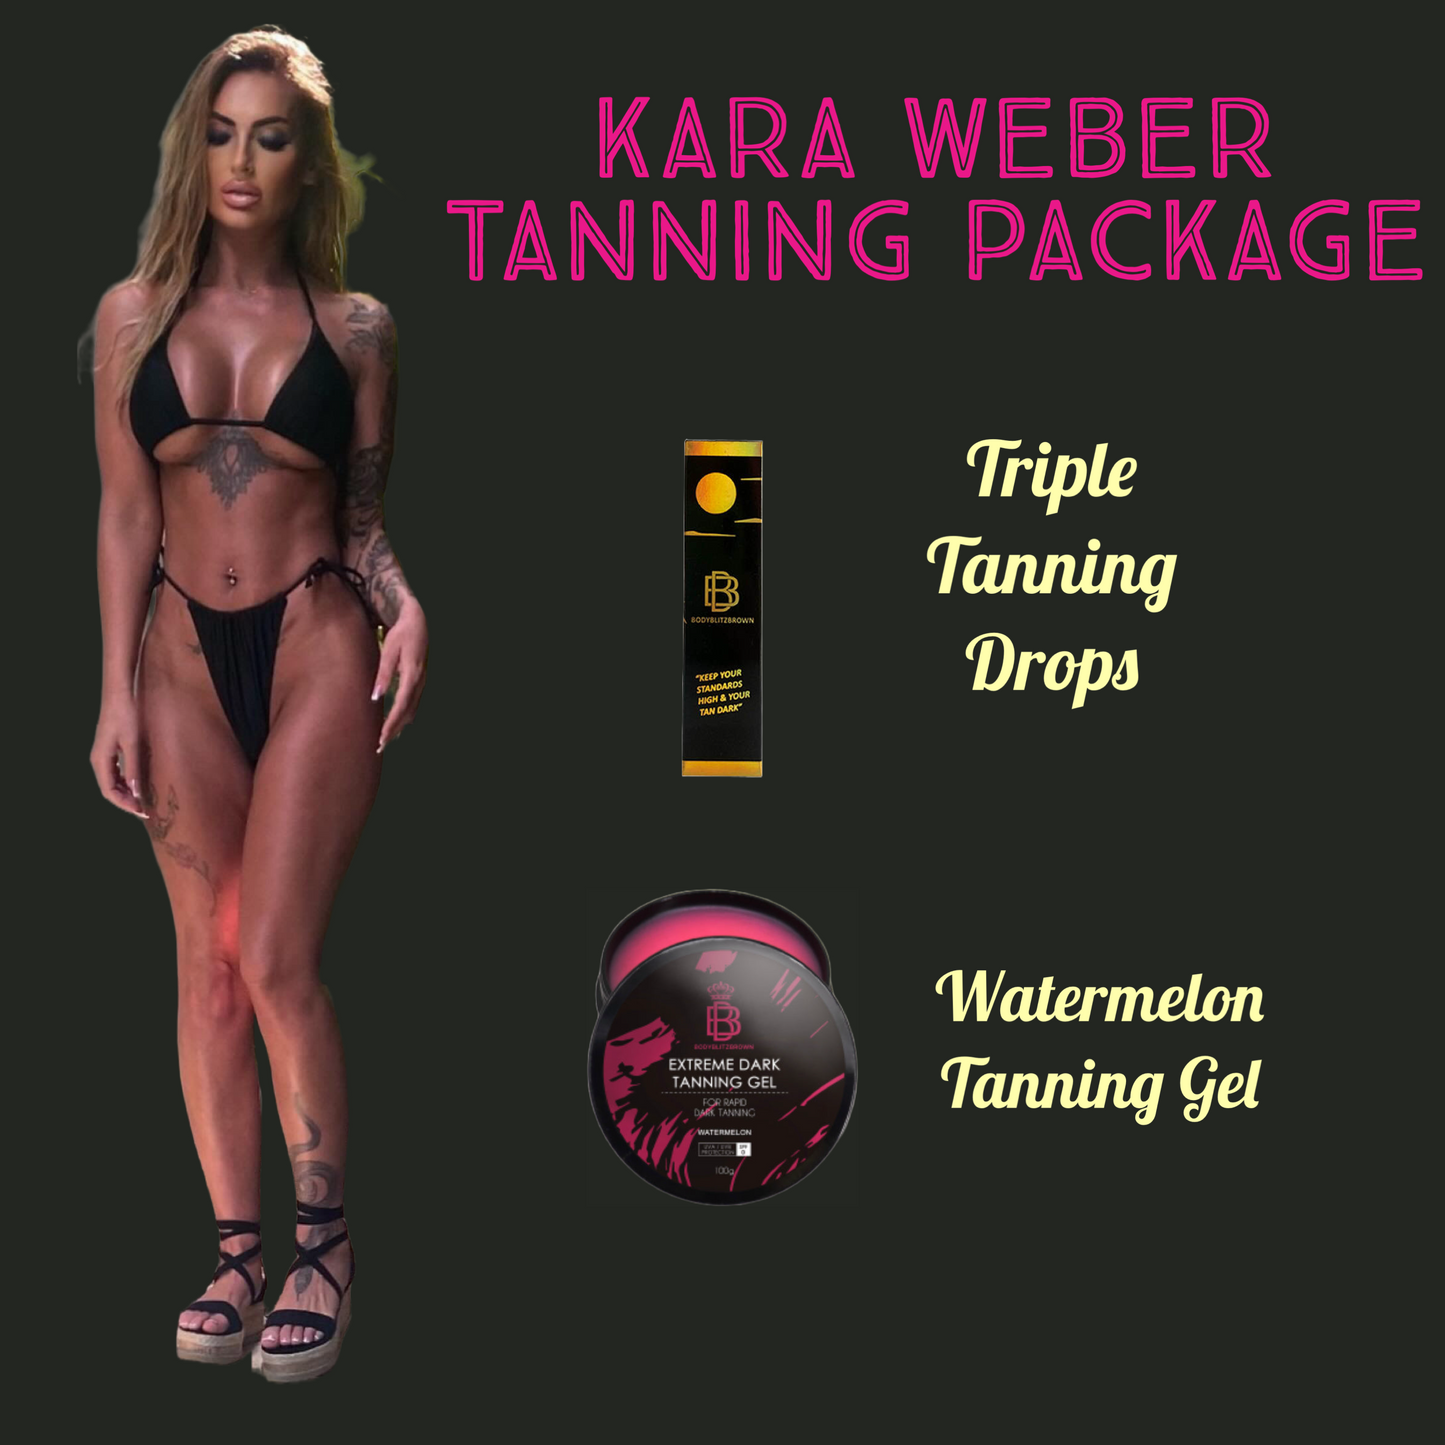 The Kara Weber Tanning Package